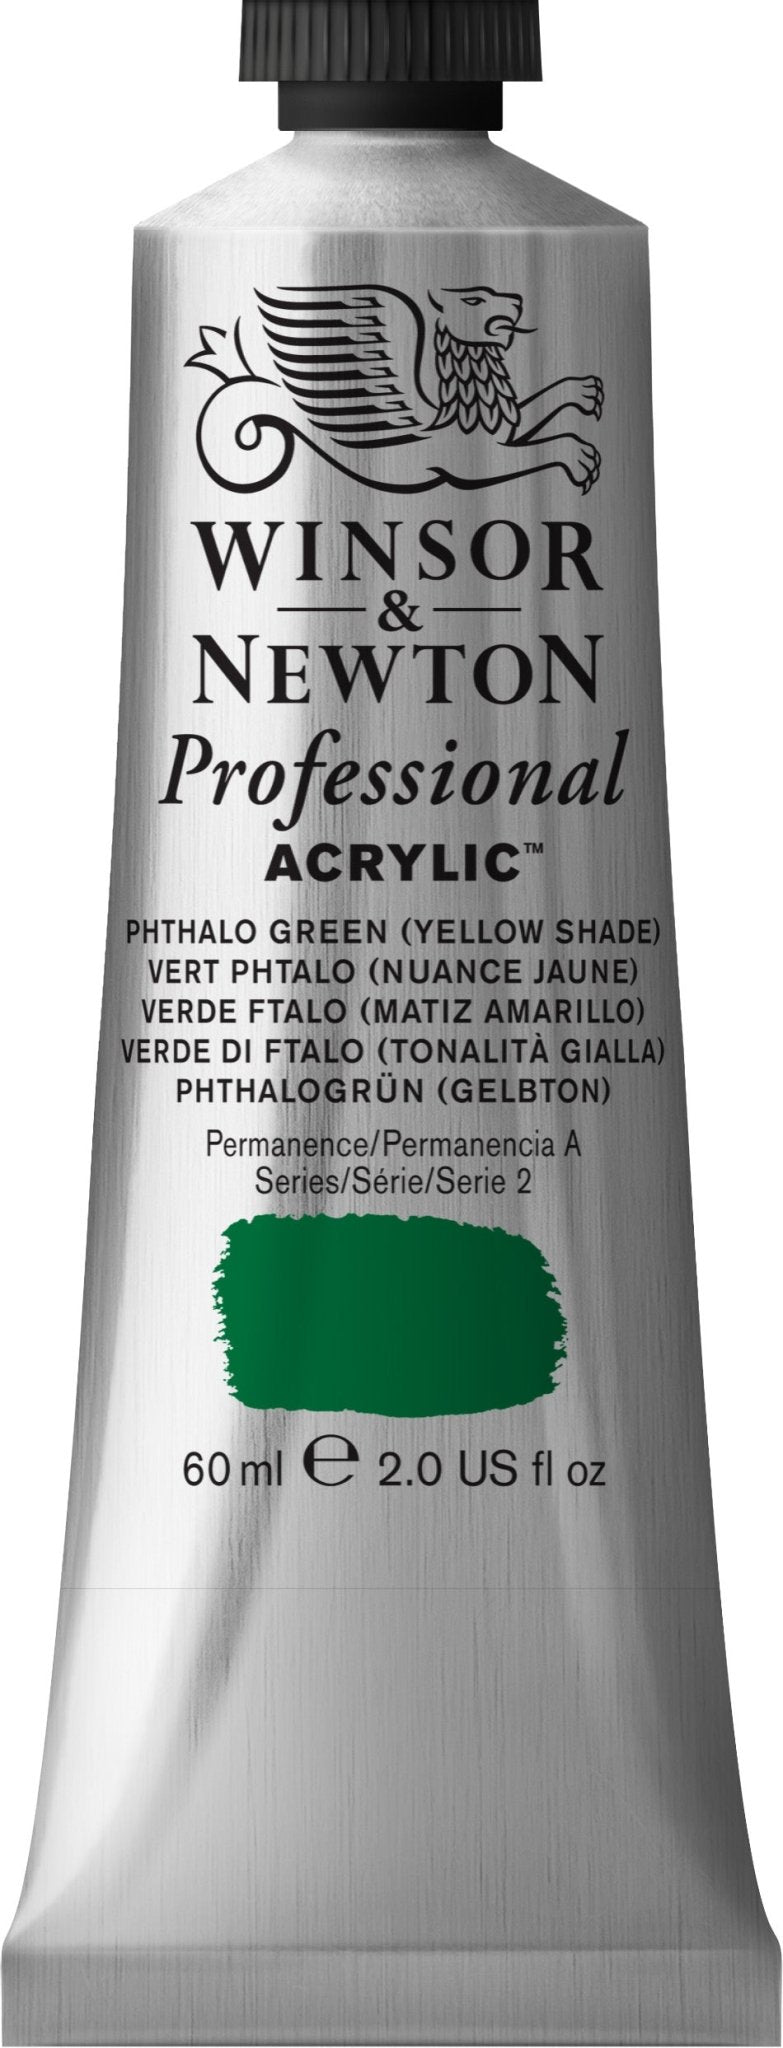 W & N Professional Acrylic 60ml Phthalo Green Yellow Shade - theartshop.com.au